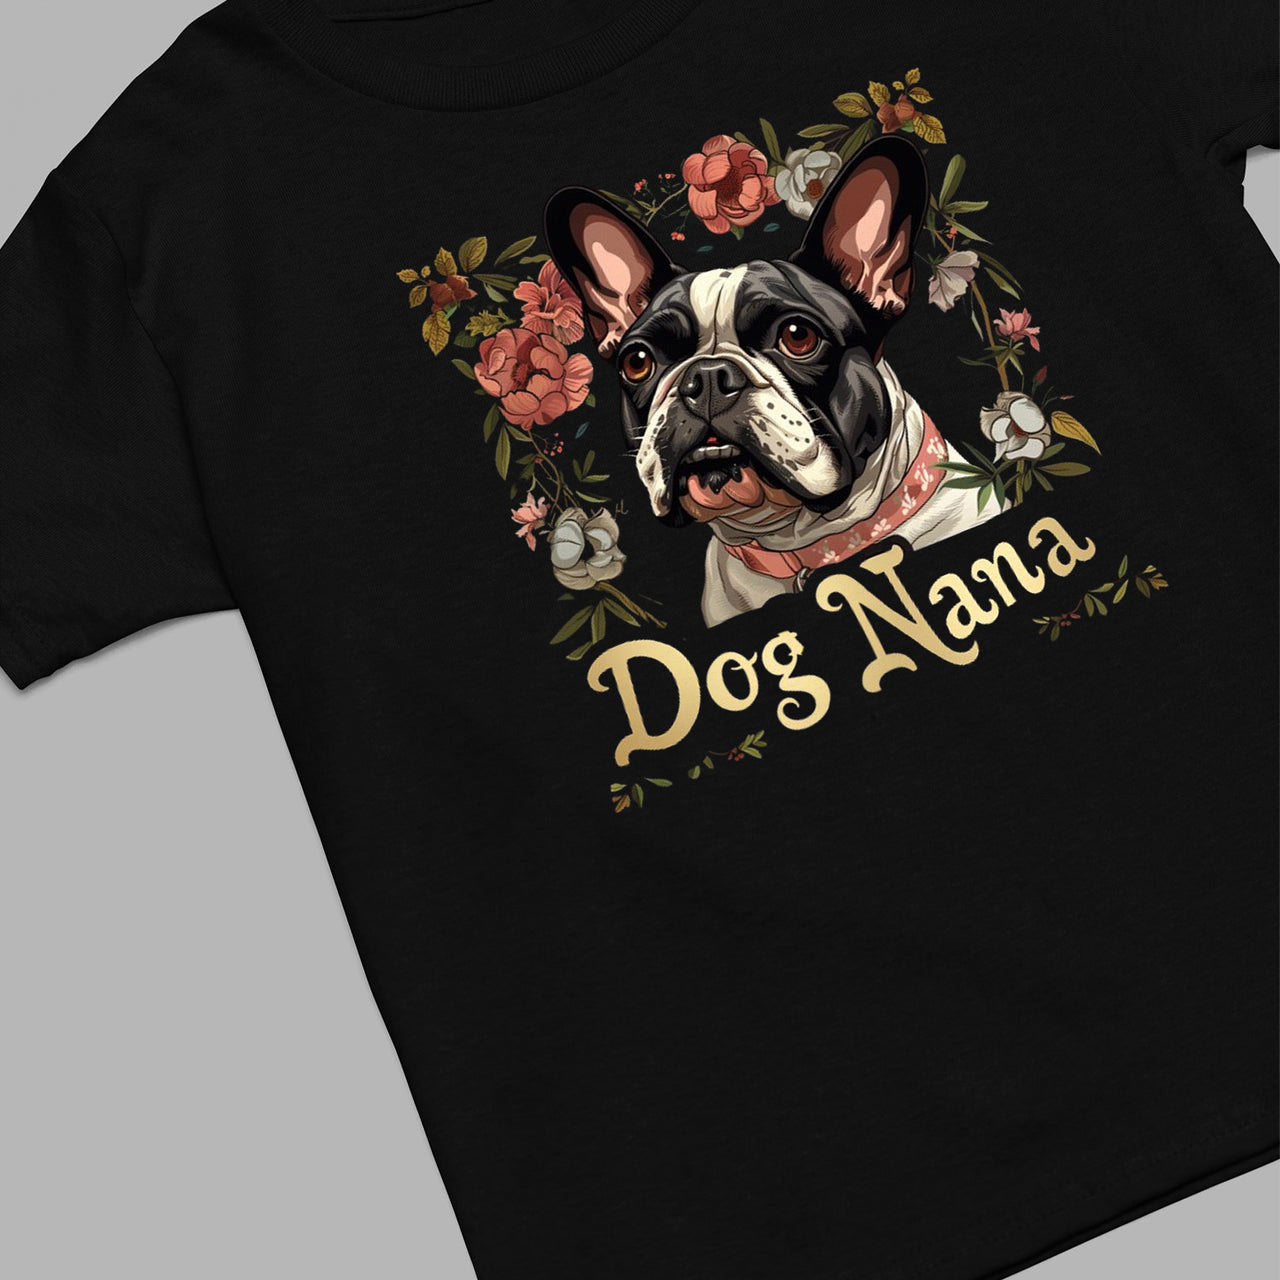 French Bulldog T-shirt, Pet Lover Shirt, Dog Lover Shirt, Dog Nana T-Shirt, Dog Owner Shirt, Gift For Dog Grandma, Funny Dog Shirts, Women Dog T-Shirt, Mother's Day Gift, Dog Lover Wife Gifts, Dog Shirt